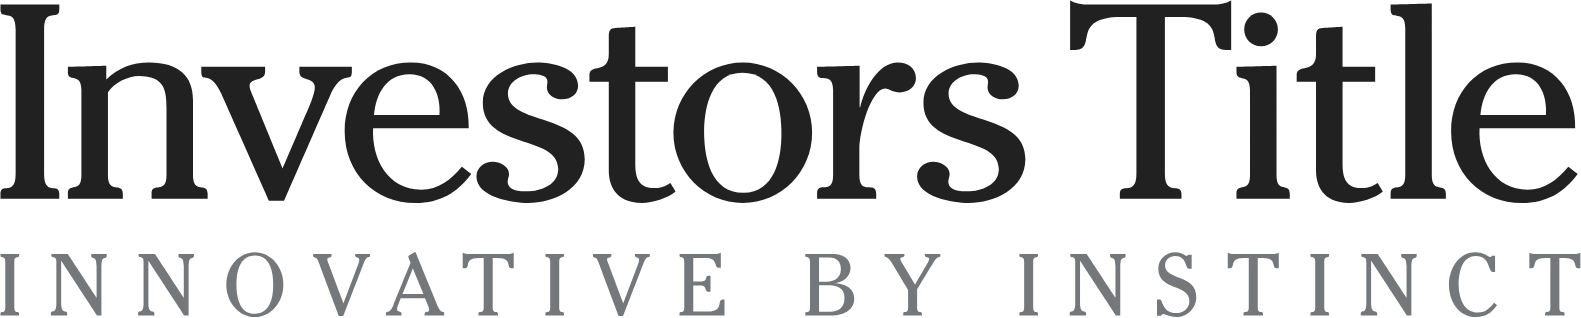 Investors Title Company
 logo large (transparent PNG)